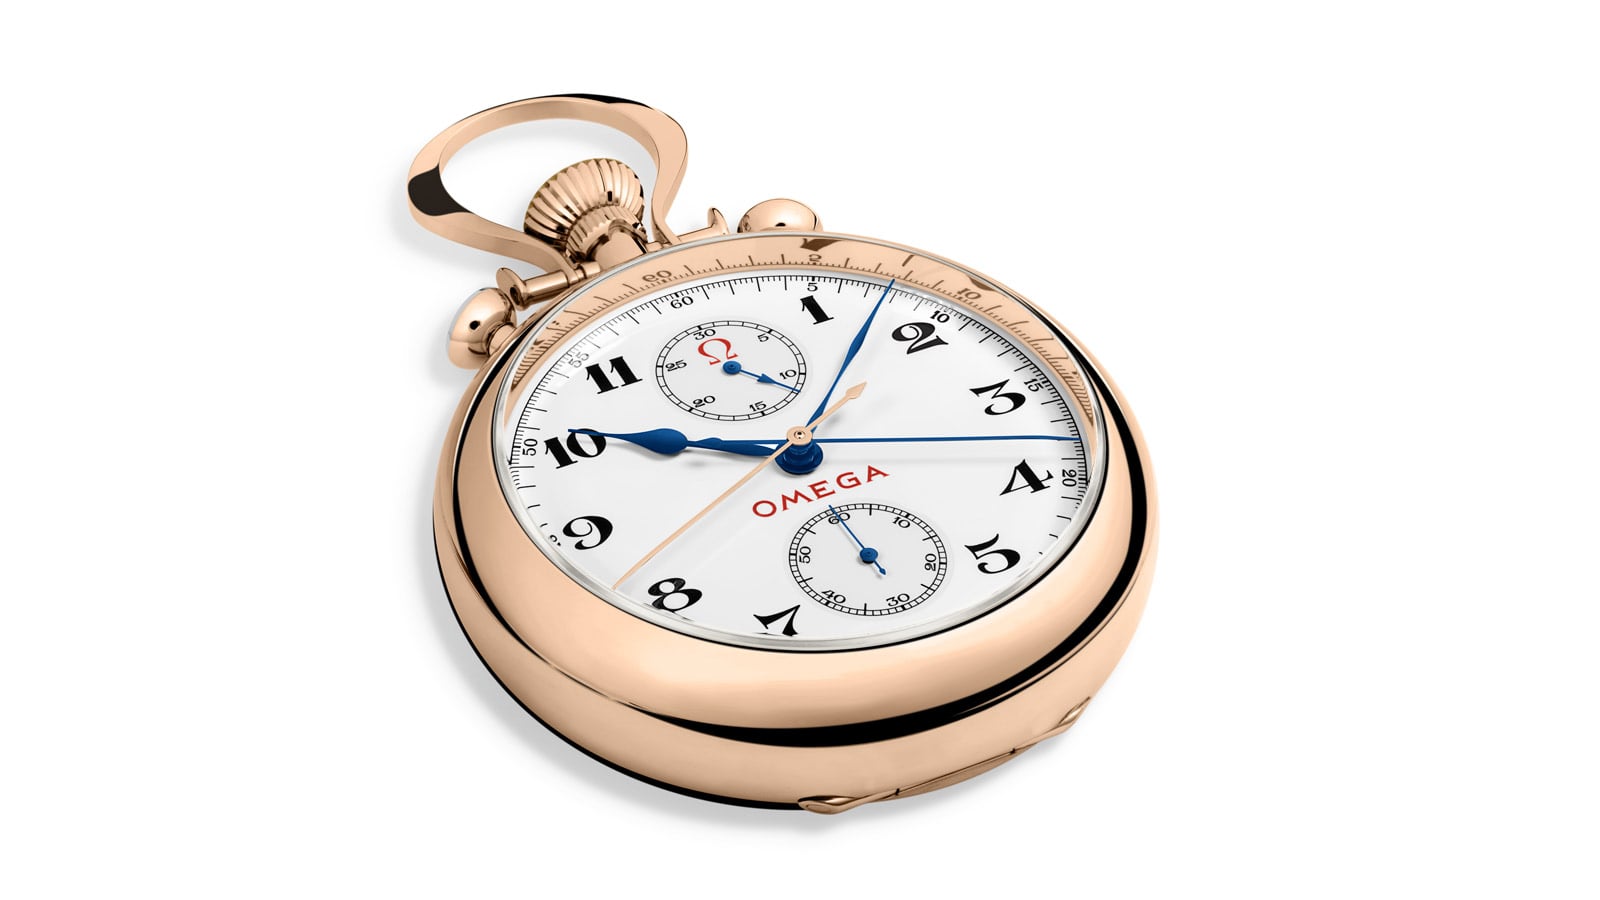 Omega Chronometre Pre-Seamaster 2576-13 cal 343 stainless watch chronometer w/box